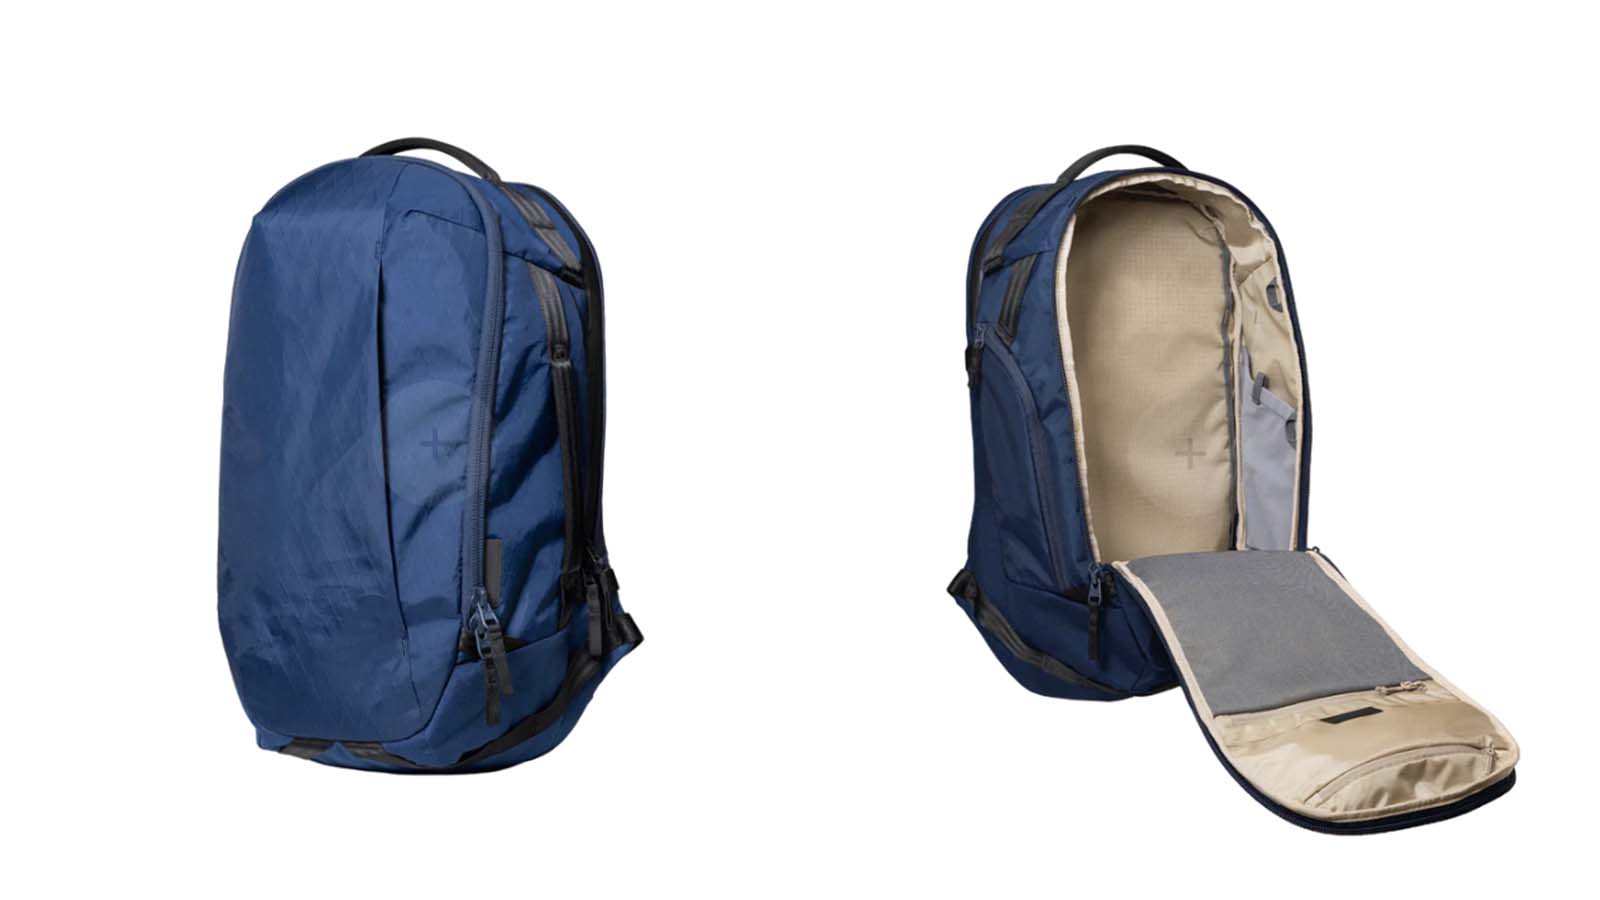 Mini Backpacks For Girls At Upto 80% Off